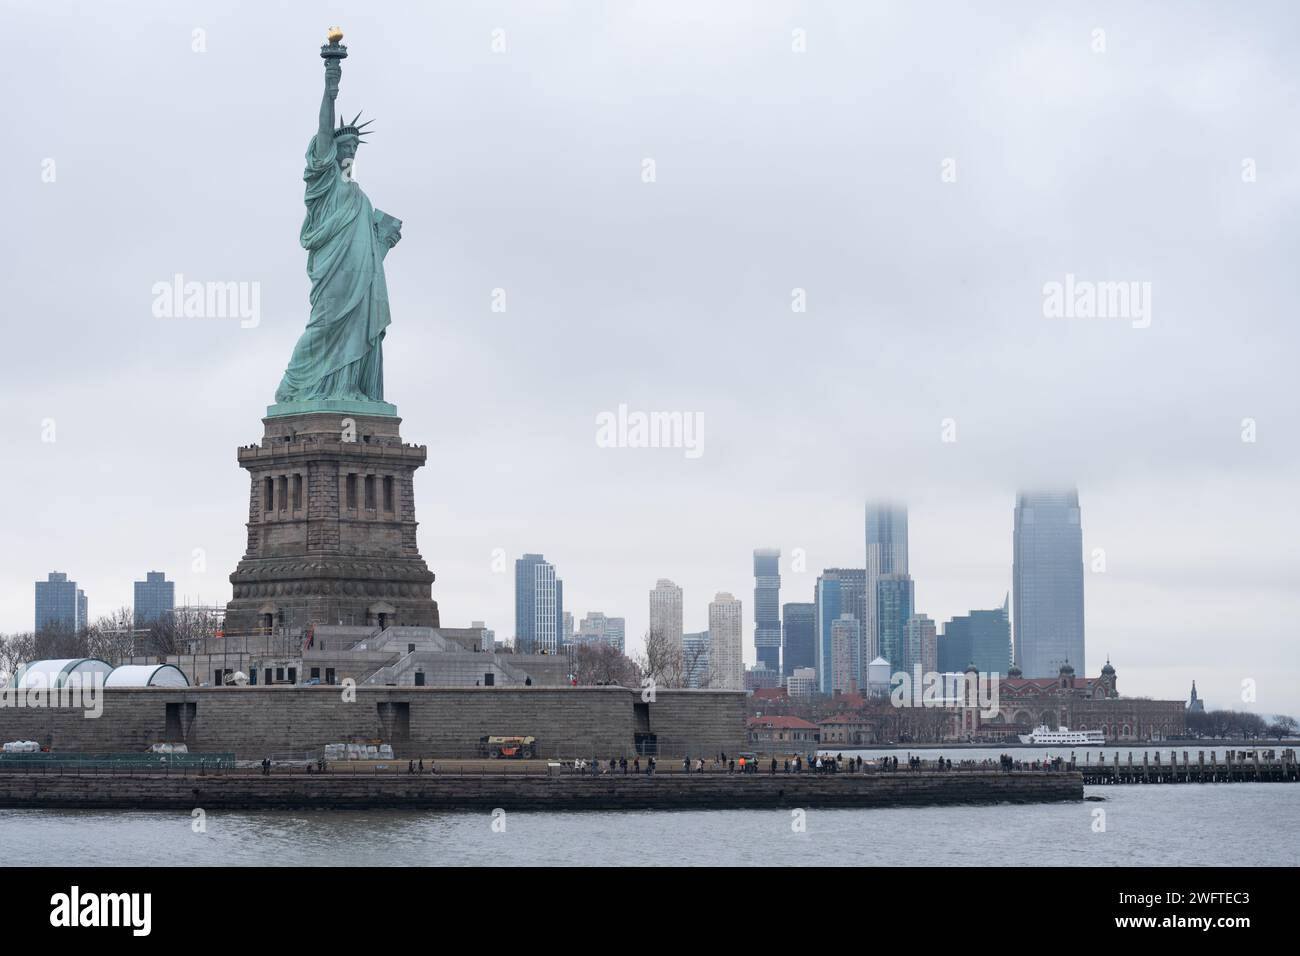 The Statue of Liberty in New York City. Photo date: Friday, January 26, 2024. Photo: Richard Gray/Alamy Stock Photo